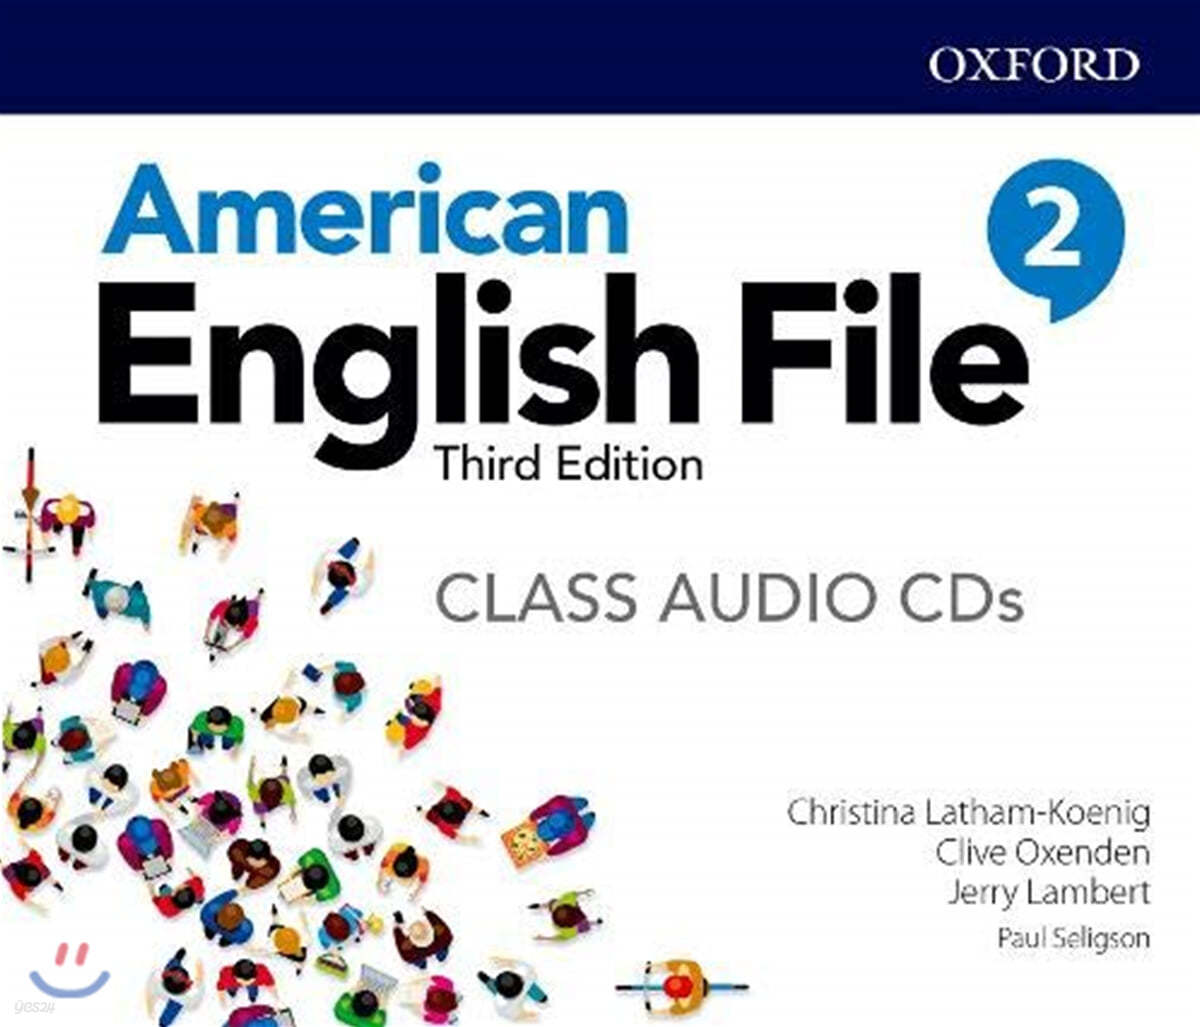 American English File 3e 2 Class Audio CD X5